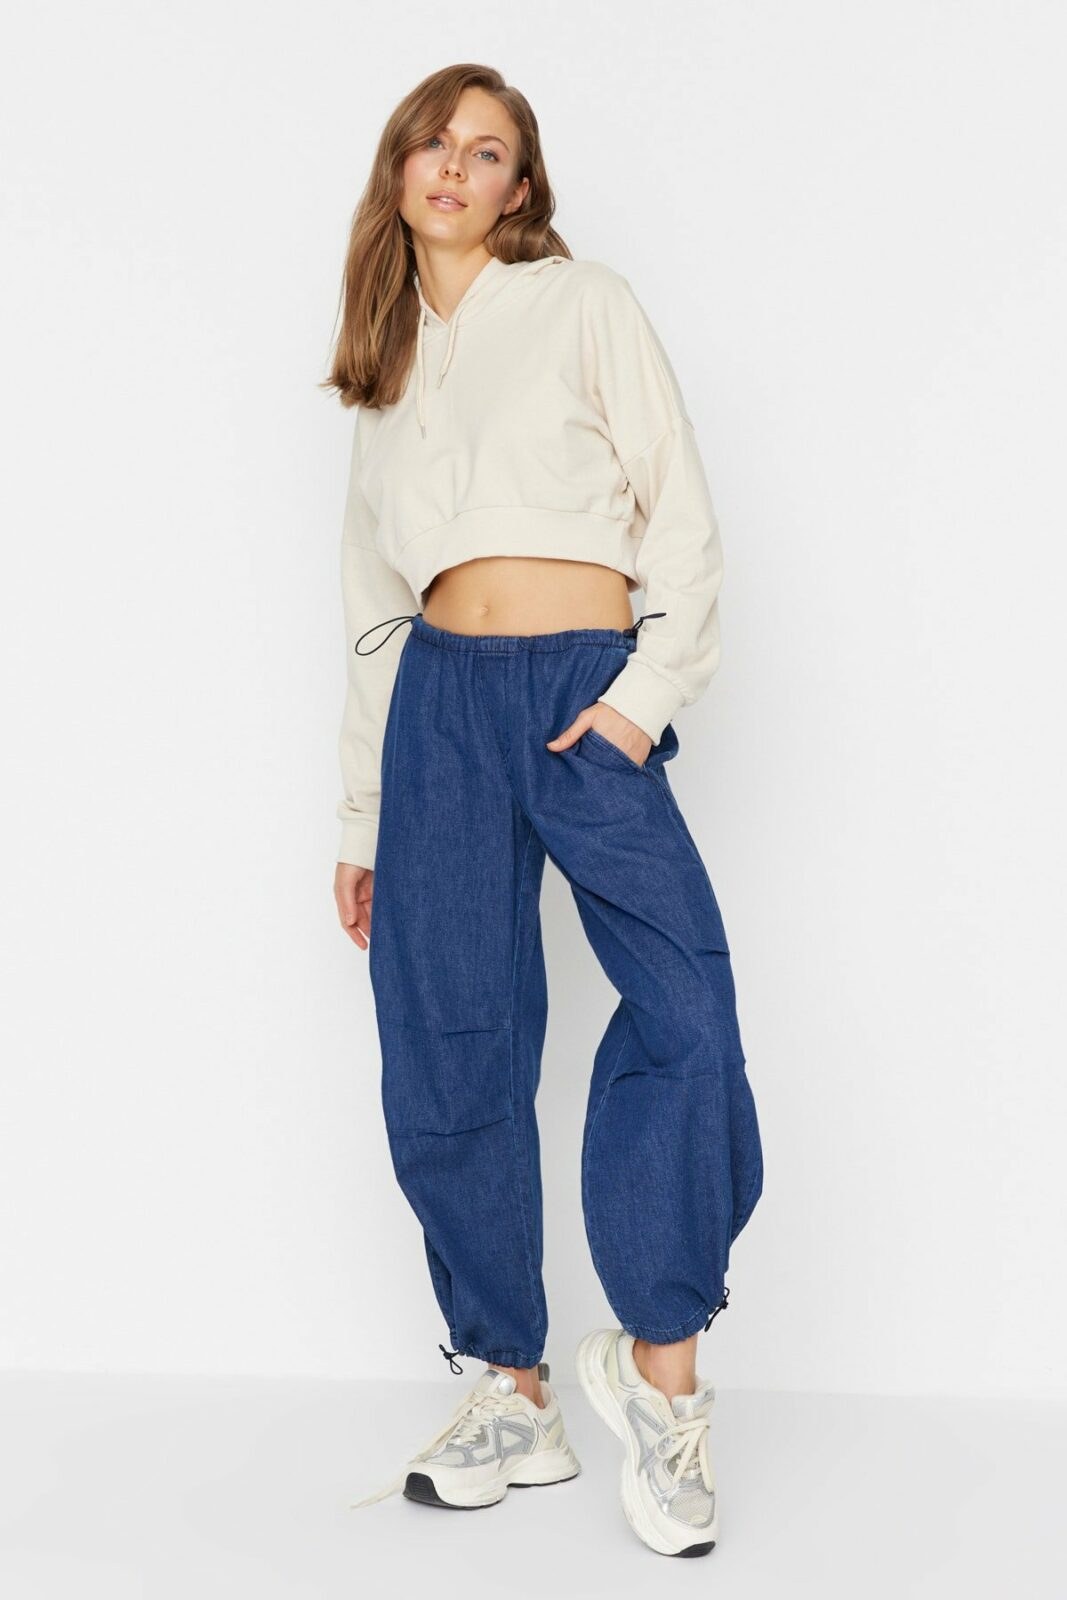 Trendyol Jeans - Navy blue